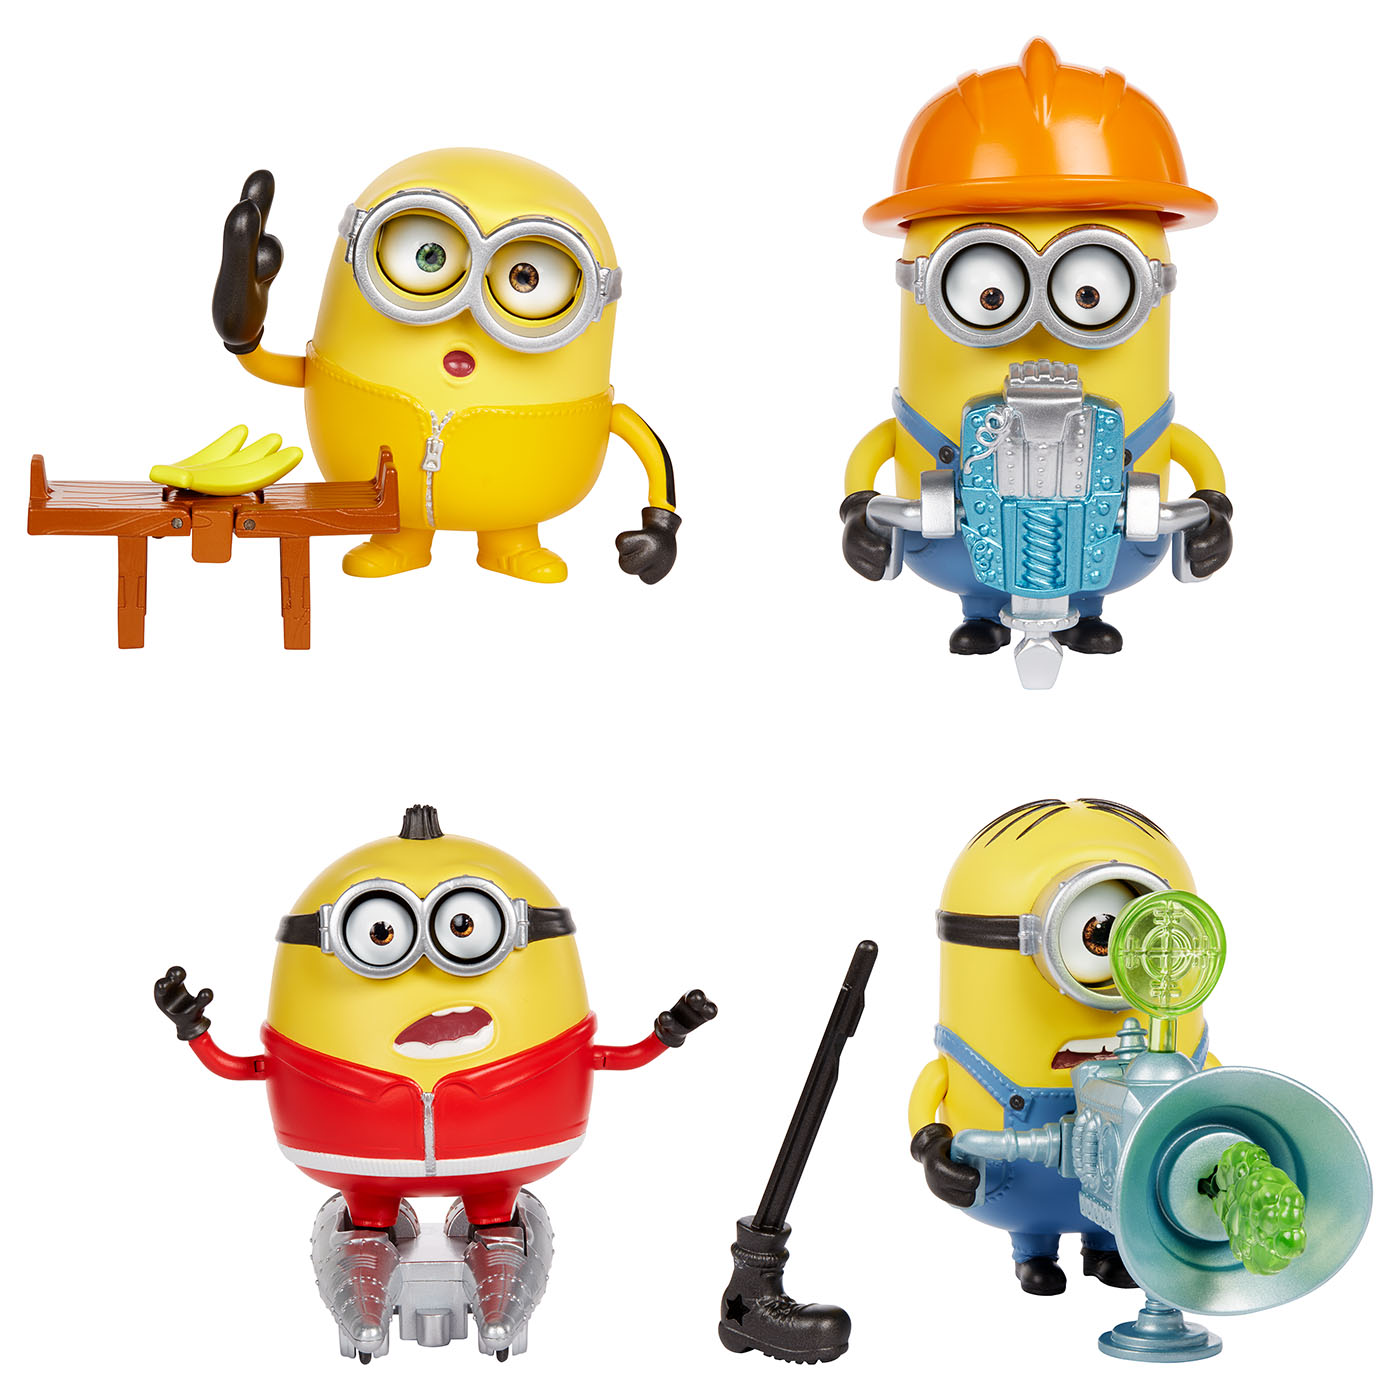 New Minions Rise Of Gru Mattel Figurines Tv Movie Video Games Fzgil Toys Hobbies